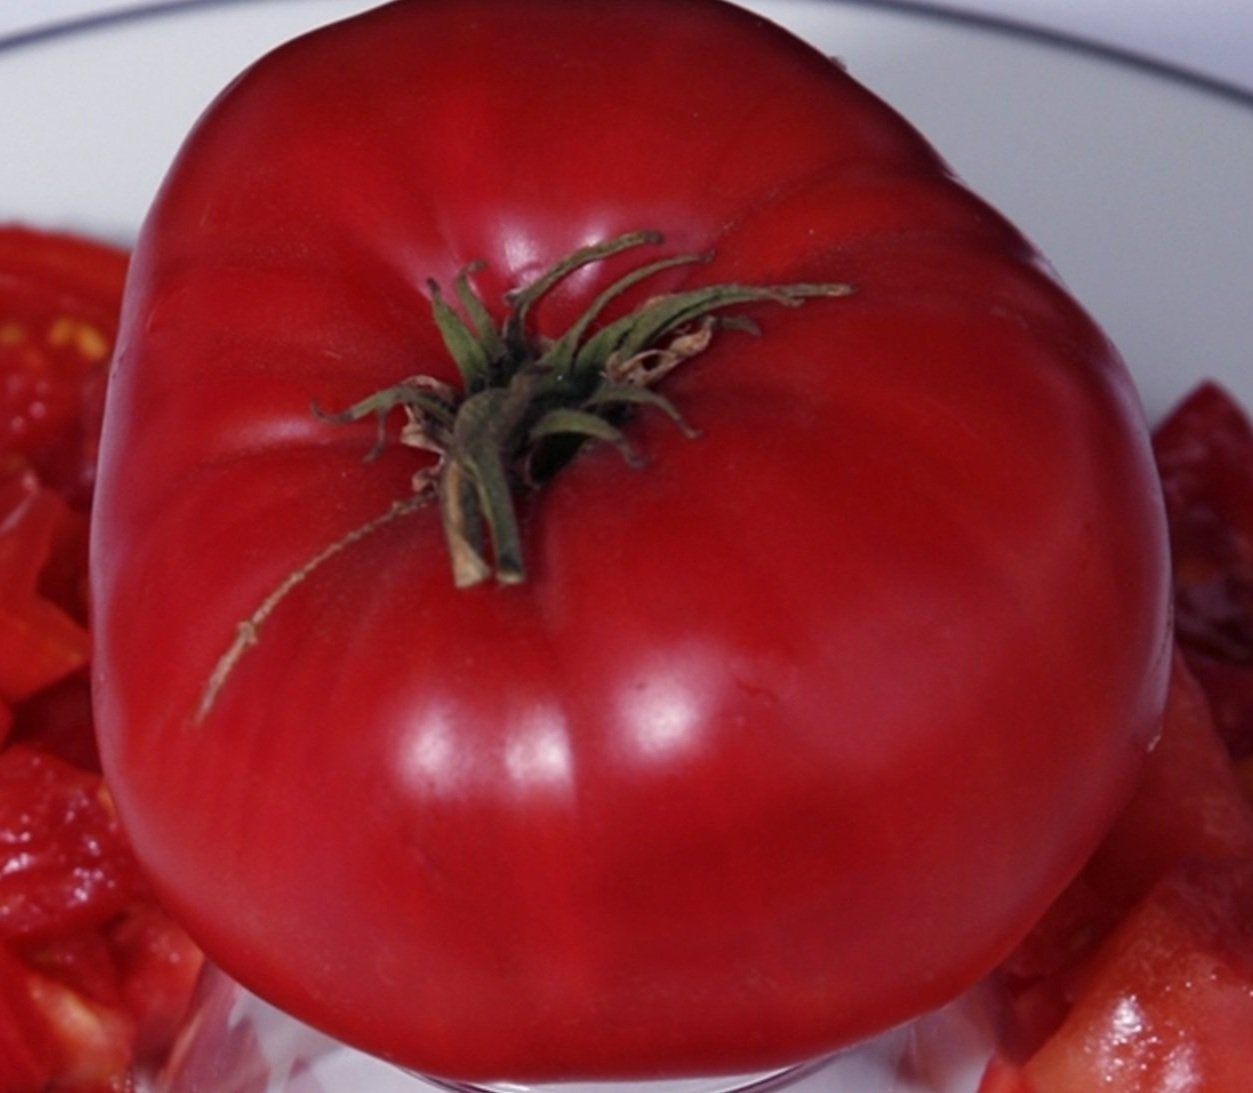 Tomato Sart Roloise - An Unique Beefsteak Type Tomato Variety - 10 Seeds